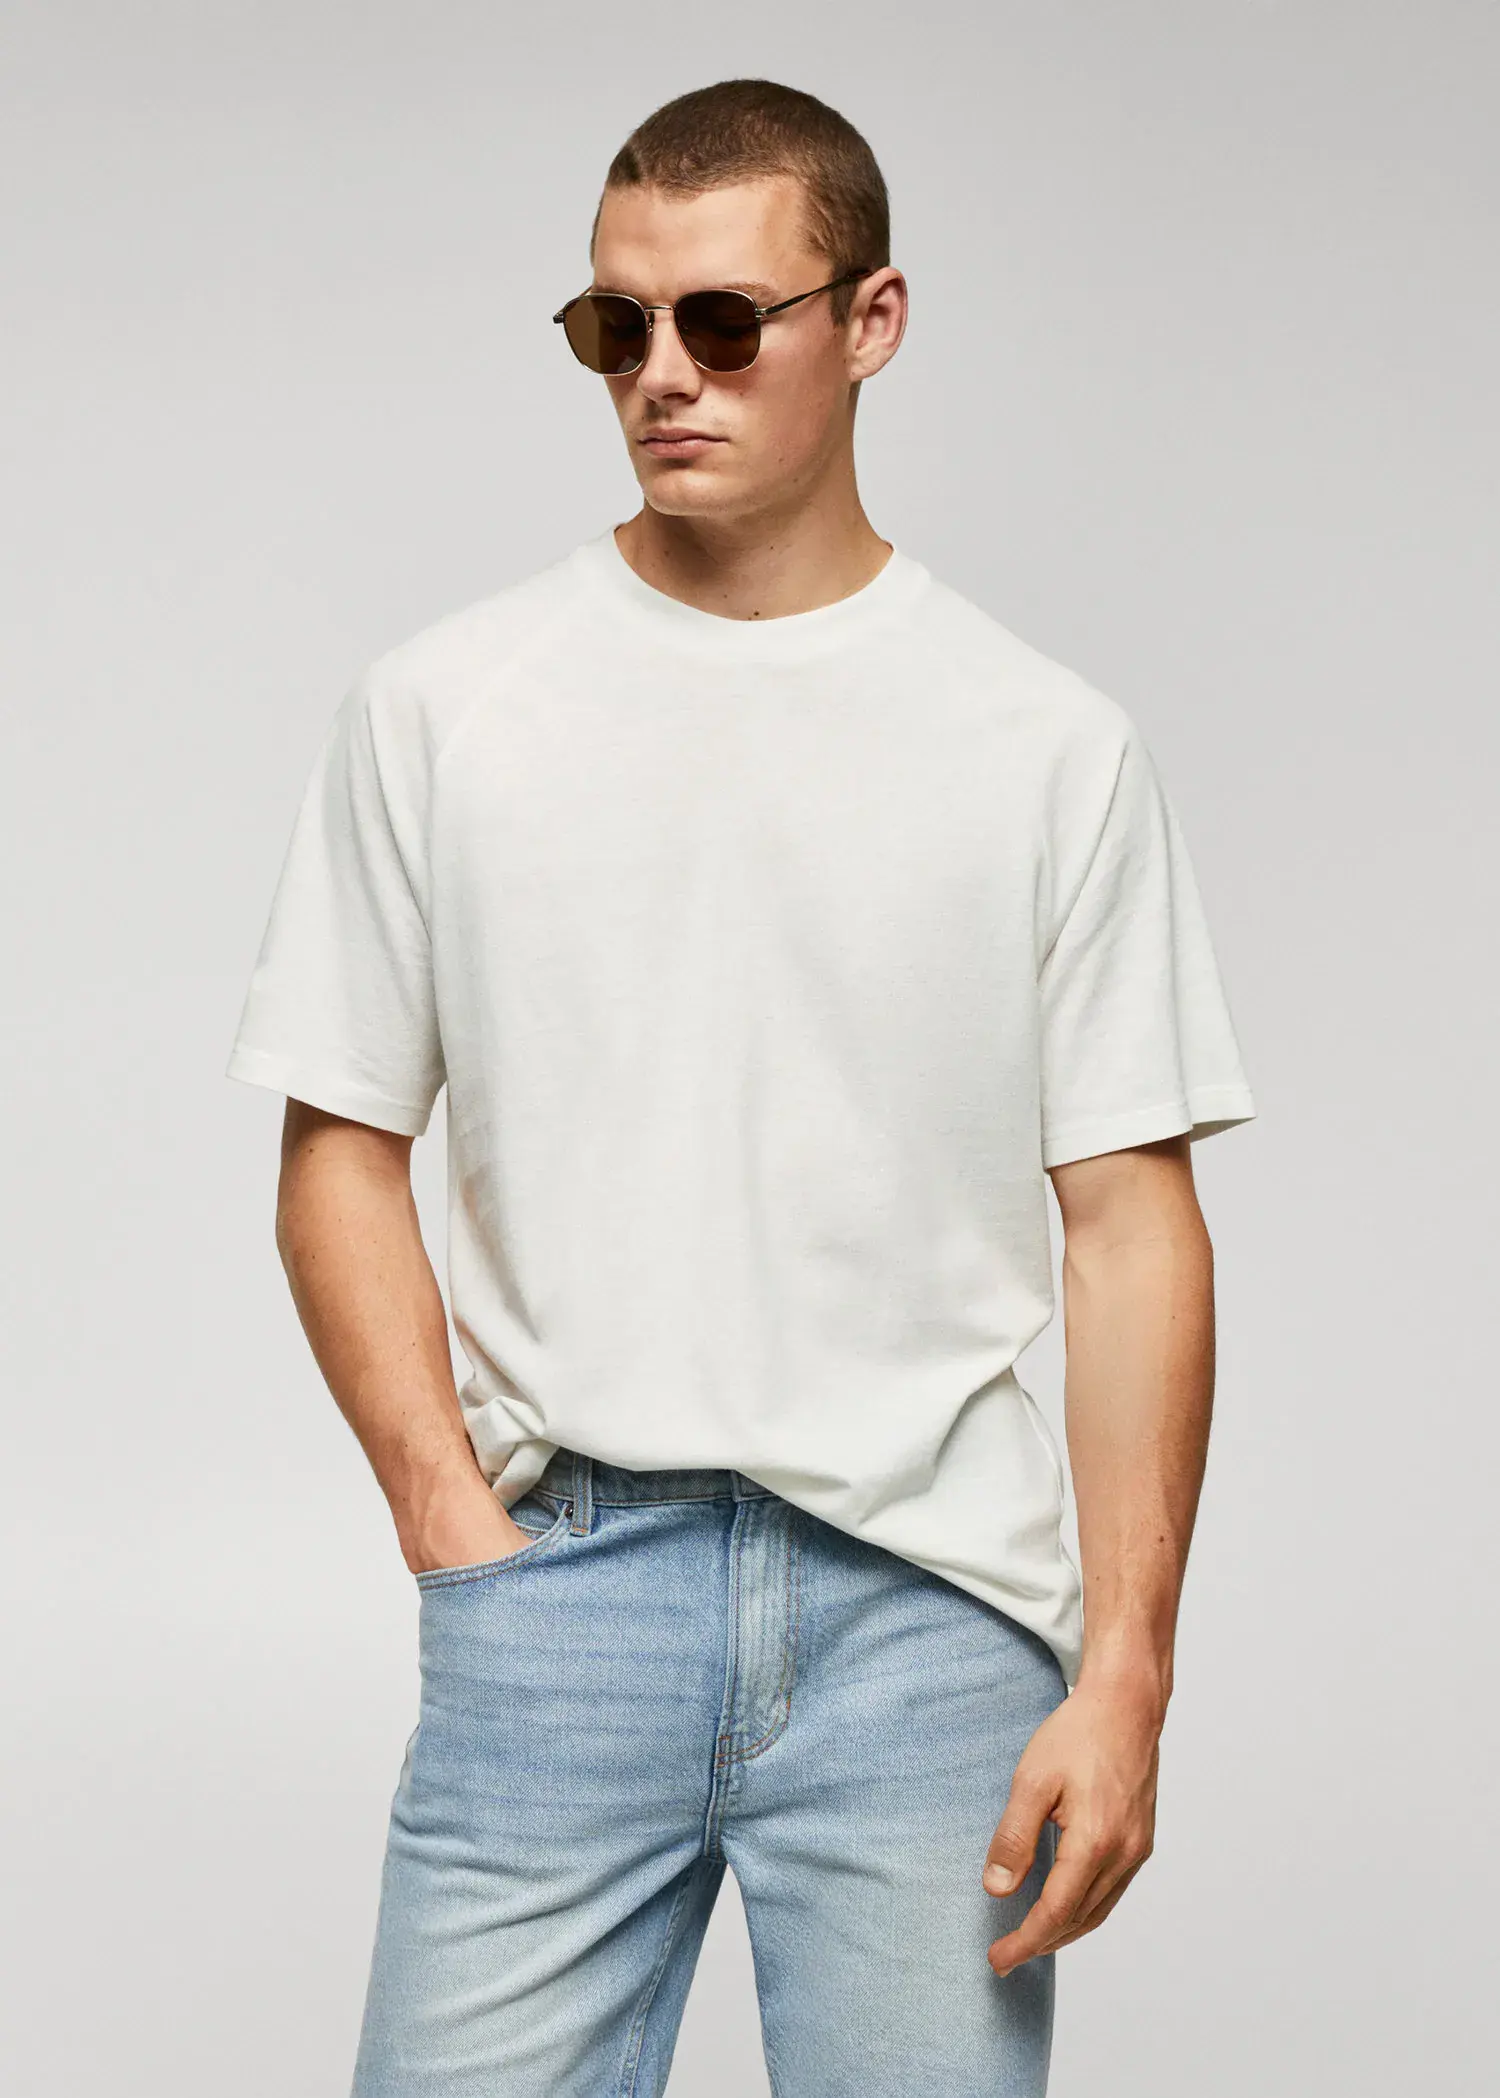 Mango Textured cotton-linen t-shirt. a man in a white shirt and sunglasses. 